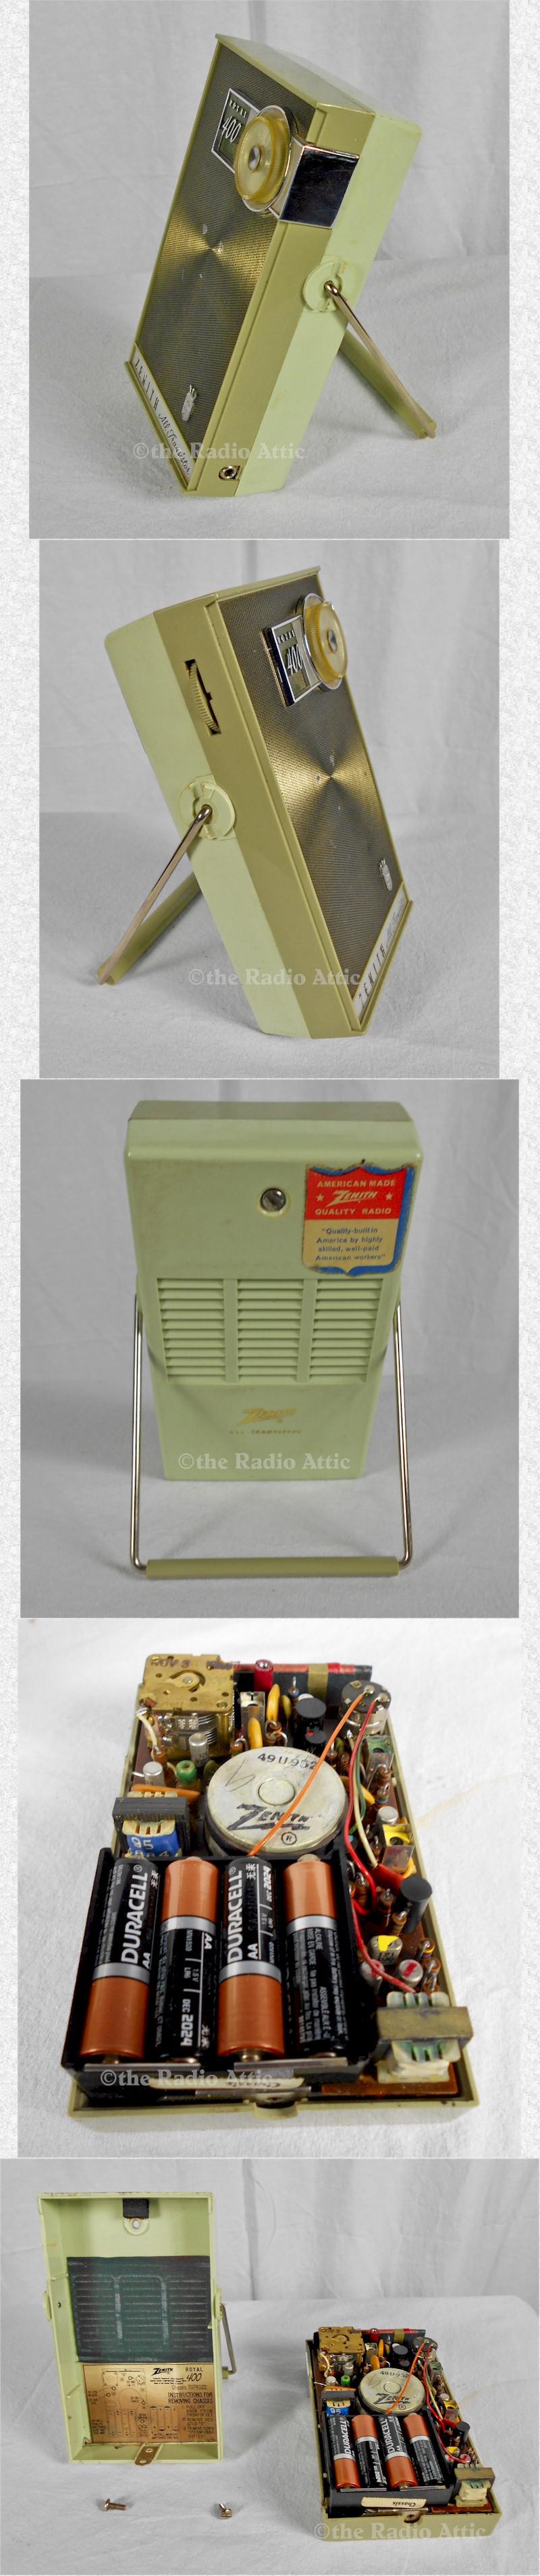 Zenith Royal 400 Pocket Radio (1961)